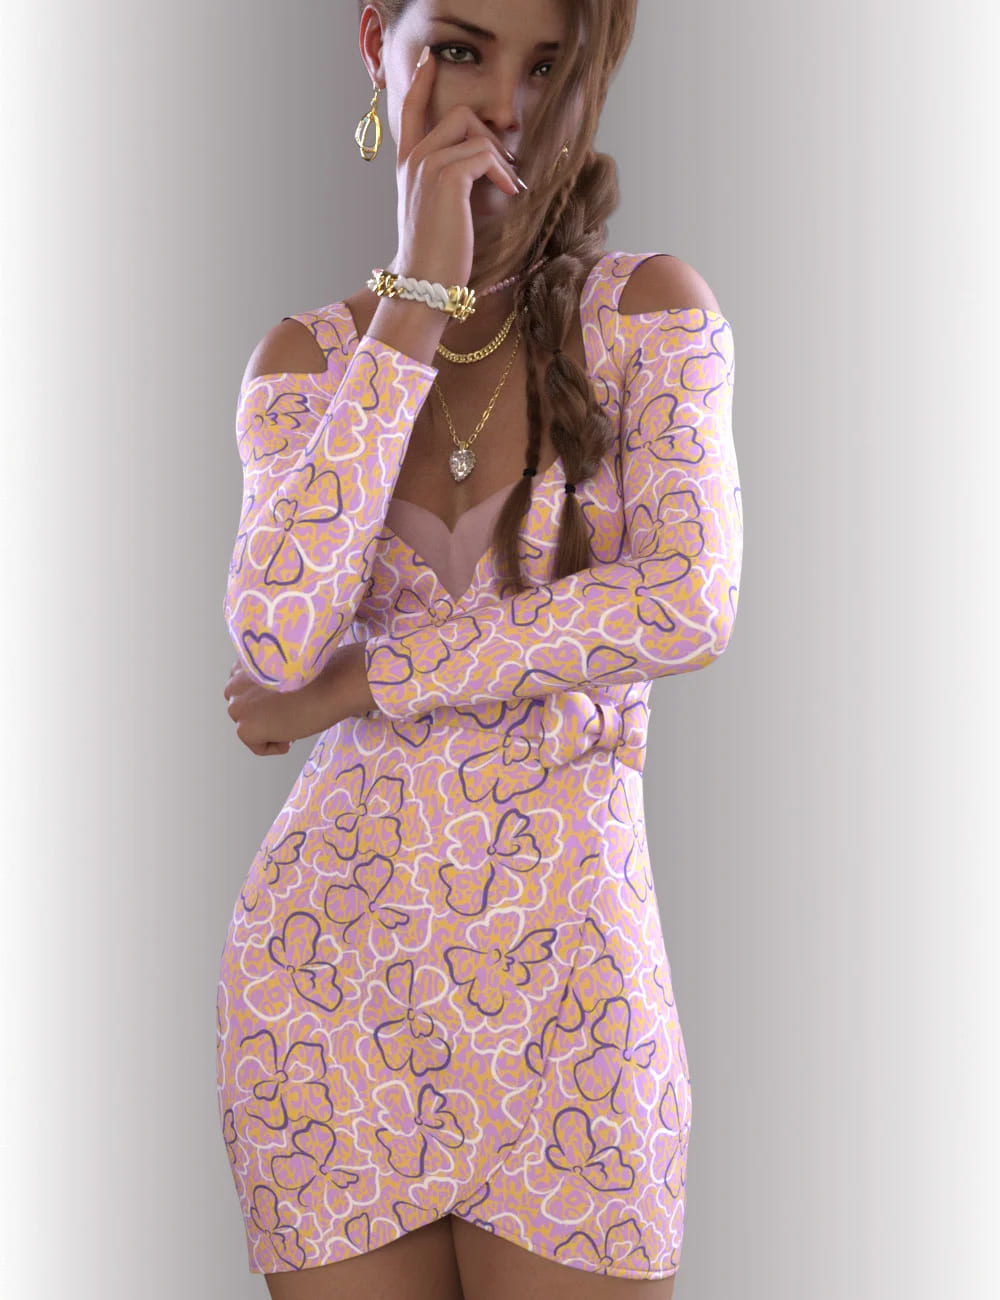 dForce Zoe Outfit for Genesis 8.1 Females_DAZ3D下载站